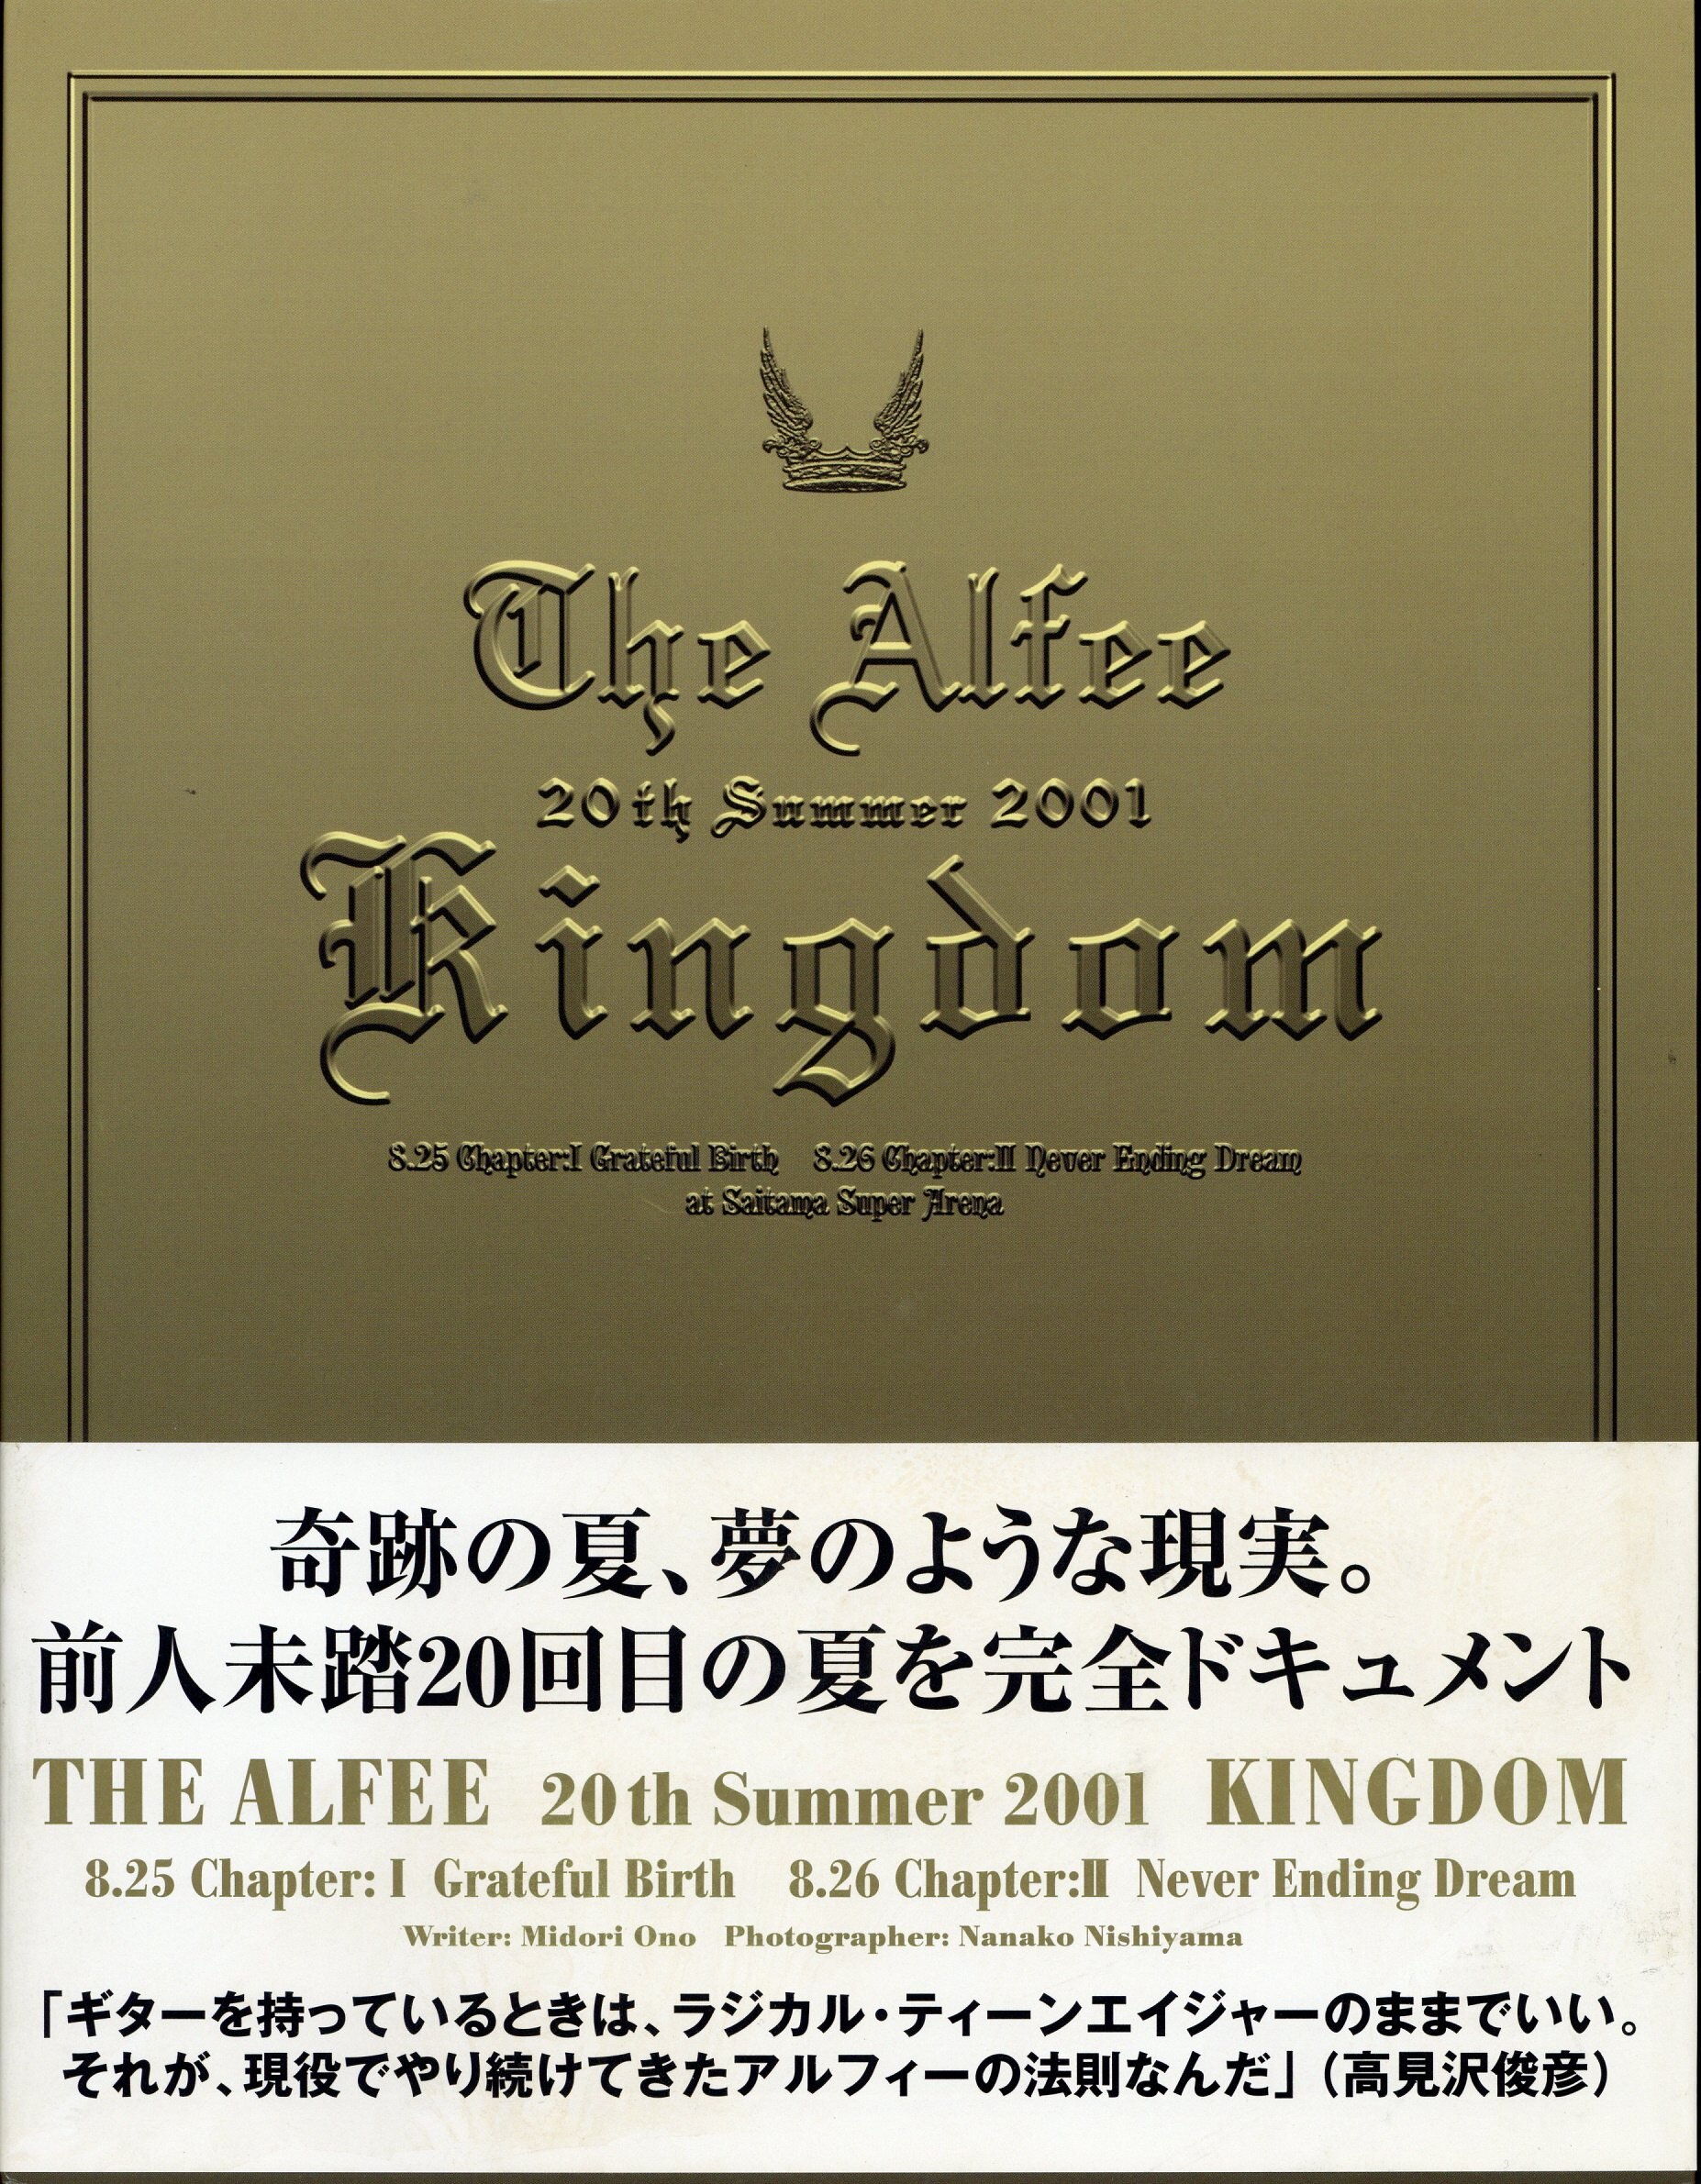 THE ALFEE/20th Summer 25-26 Aug 2001孤独の美学